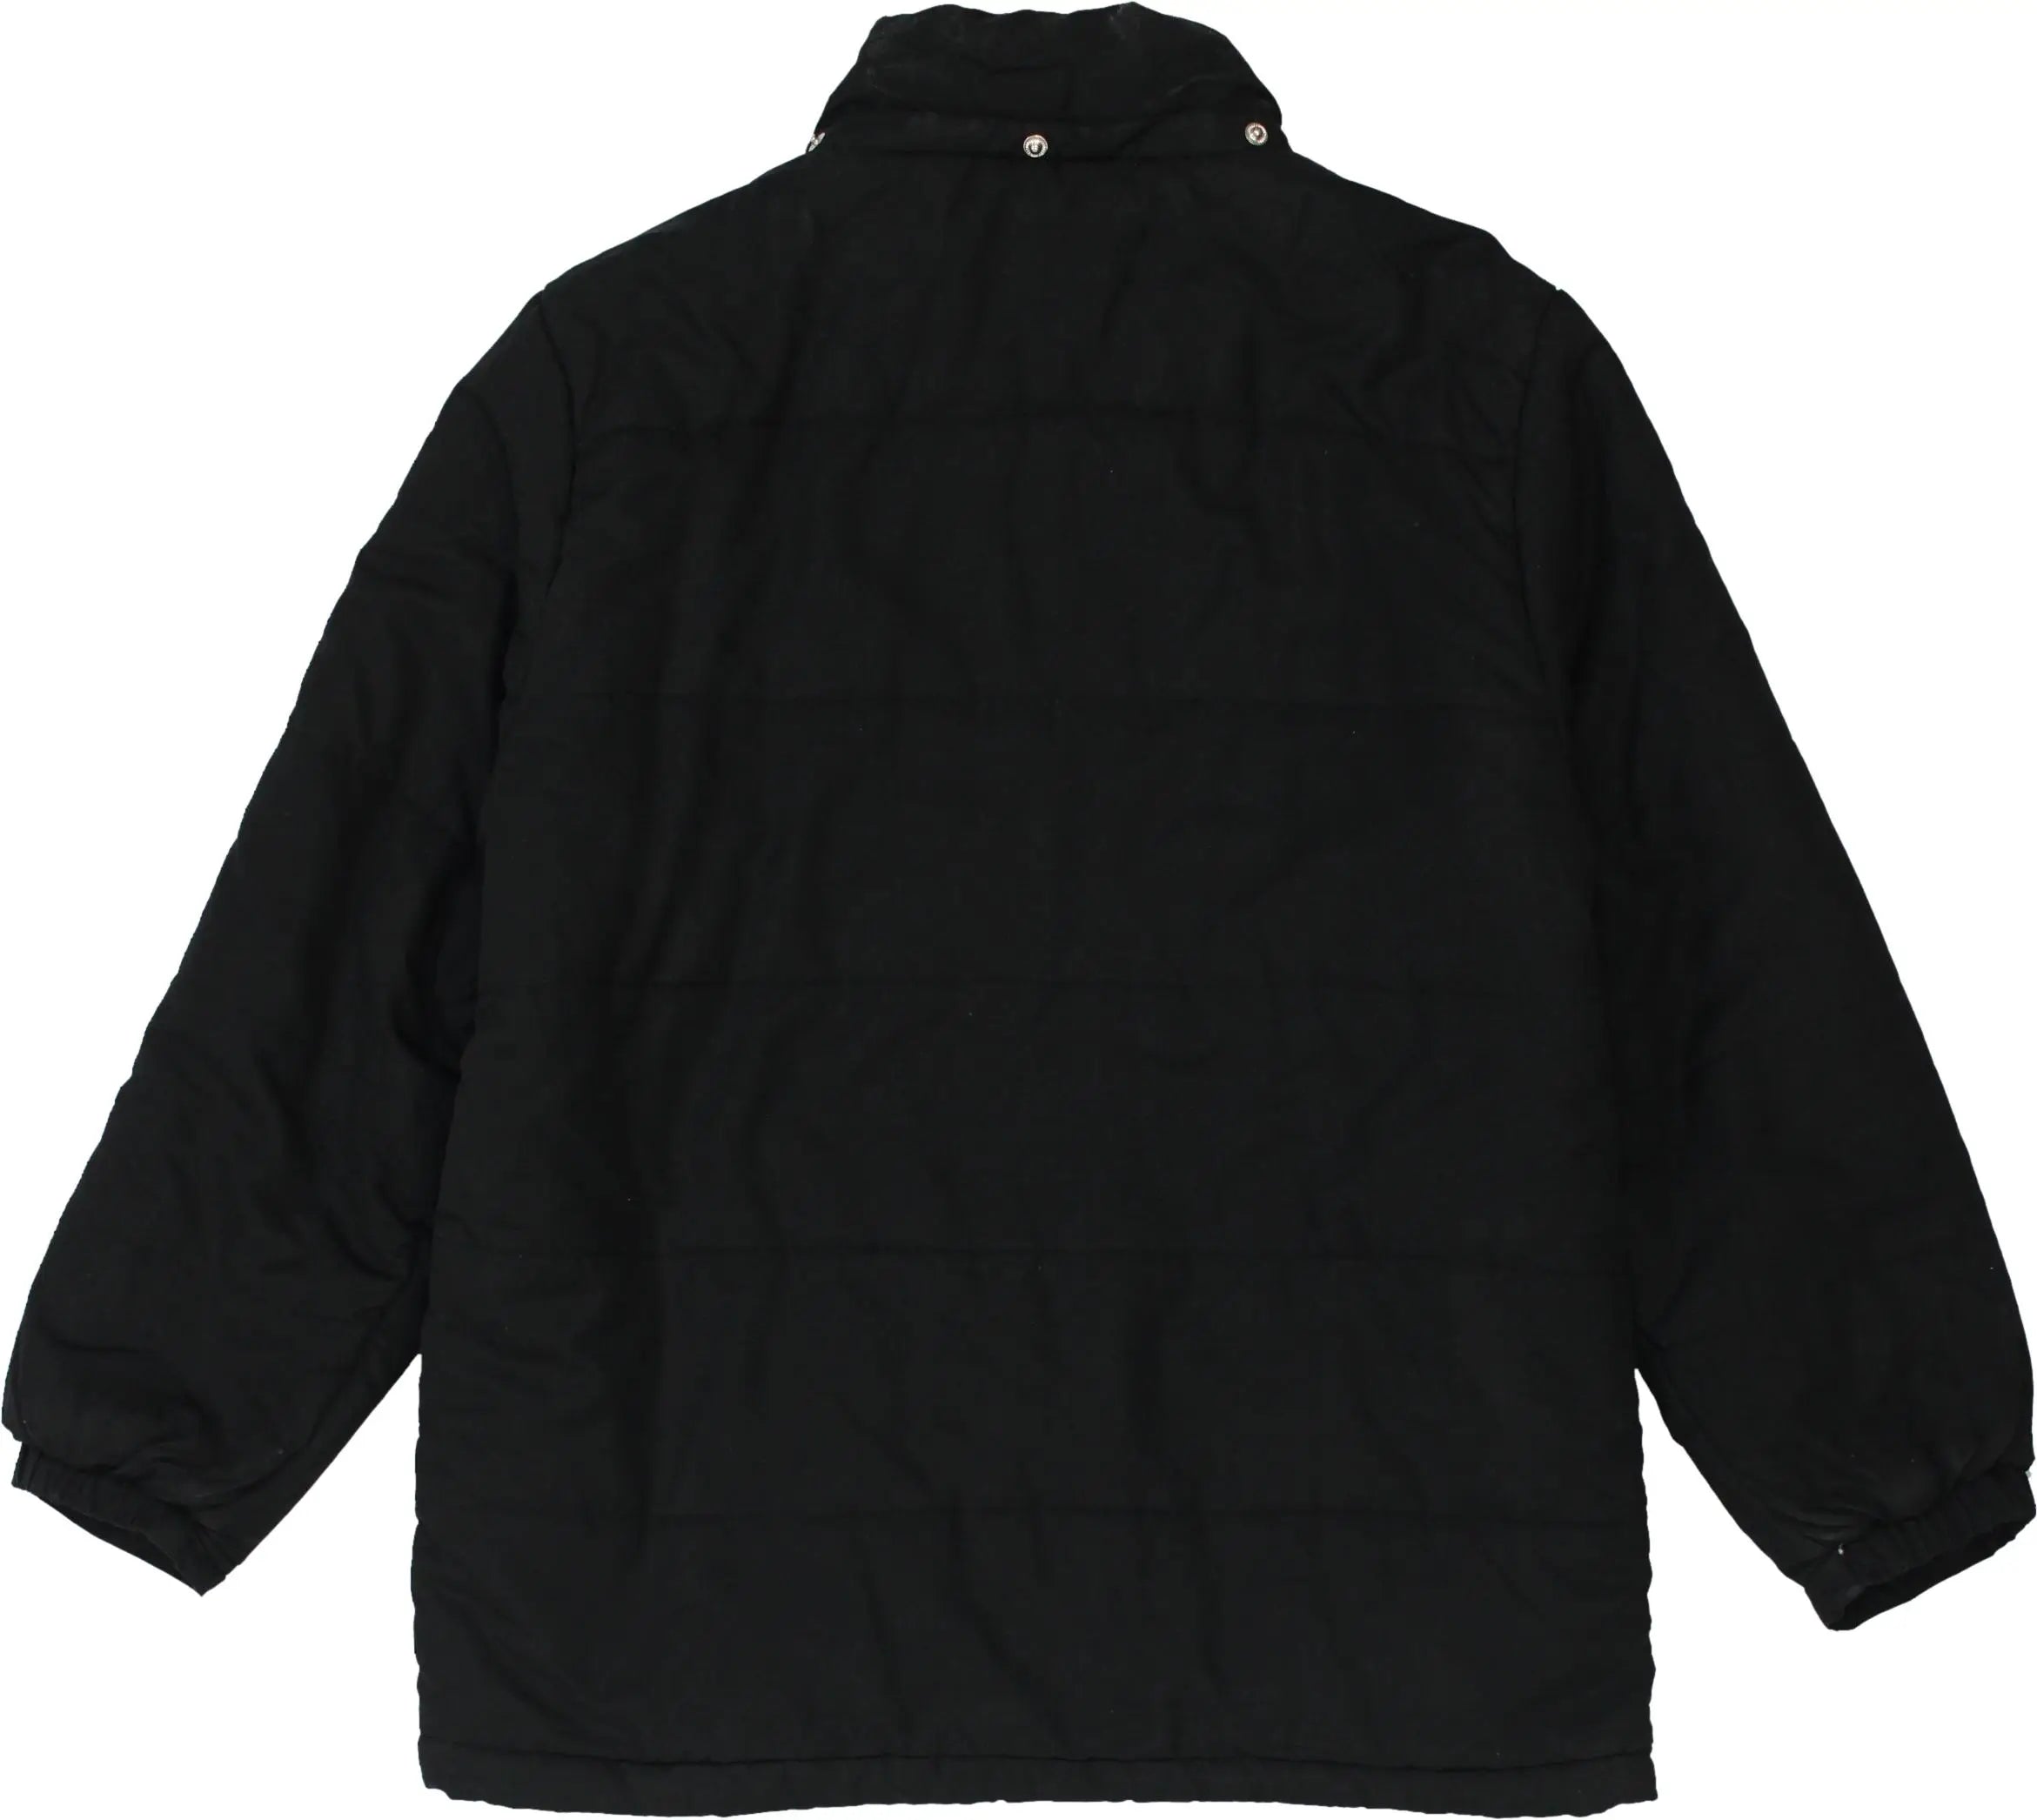 Dognose - Black Jacket- ThriftTale.com - Vintage and second handclothing